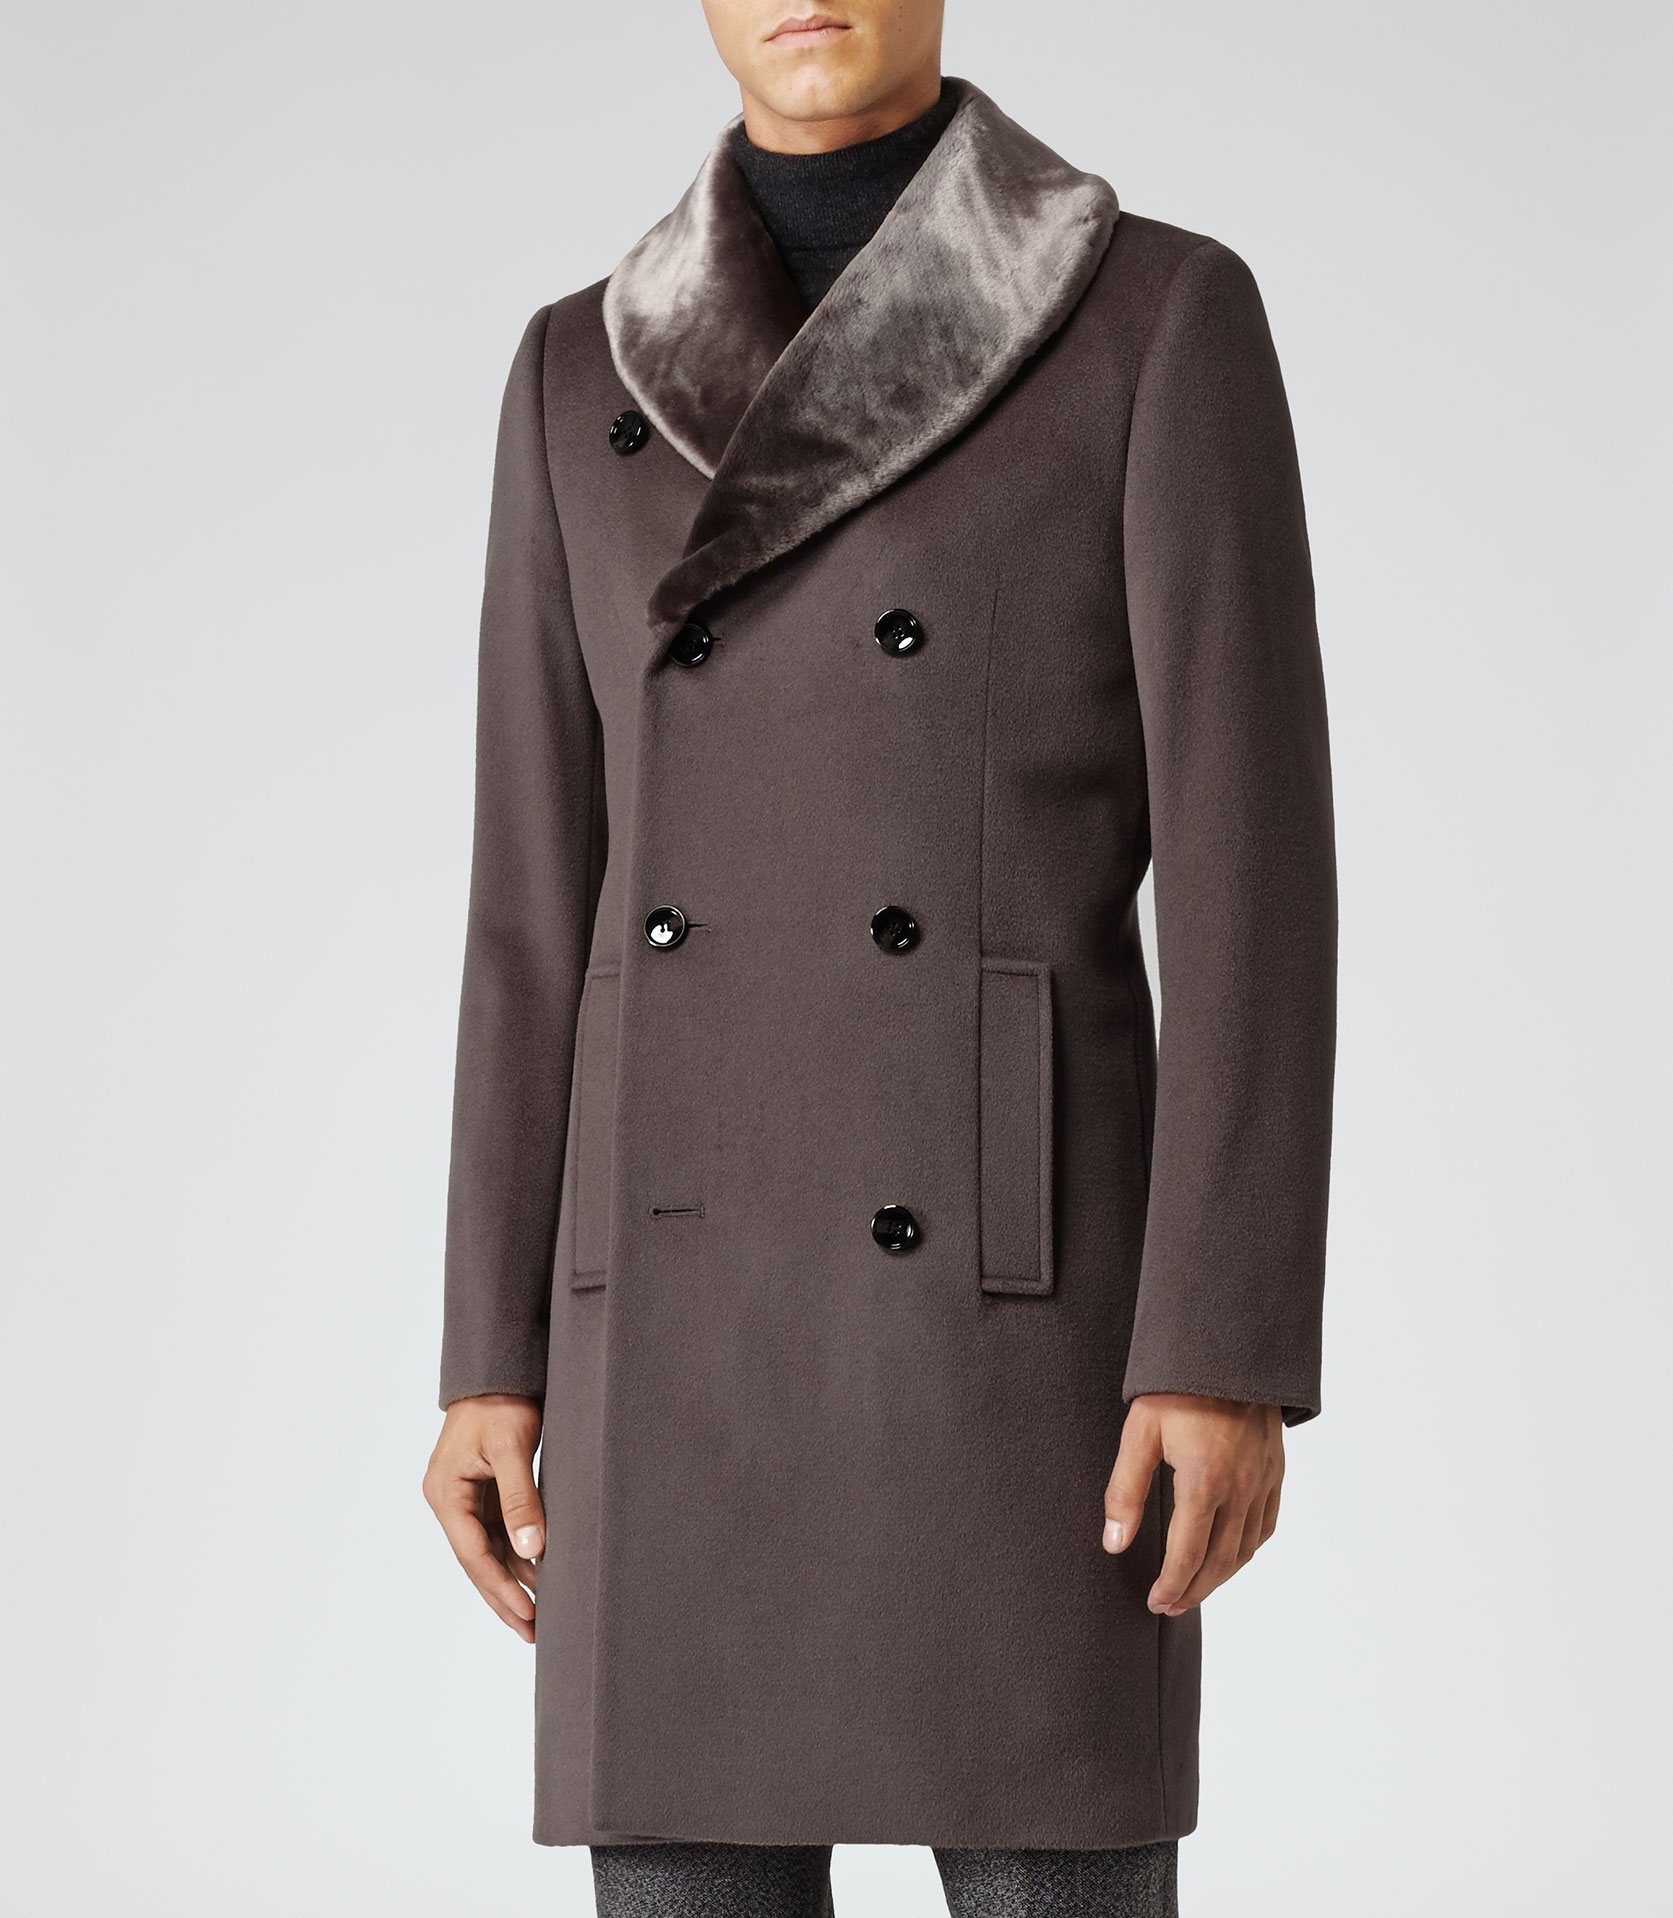 MUDI Wool Blends Men's Winter Warm Coat Jacket Fashion